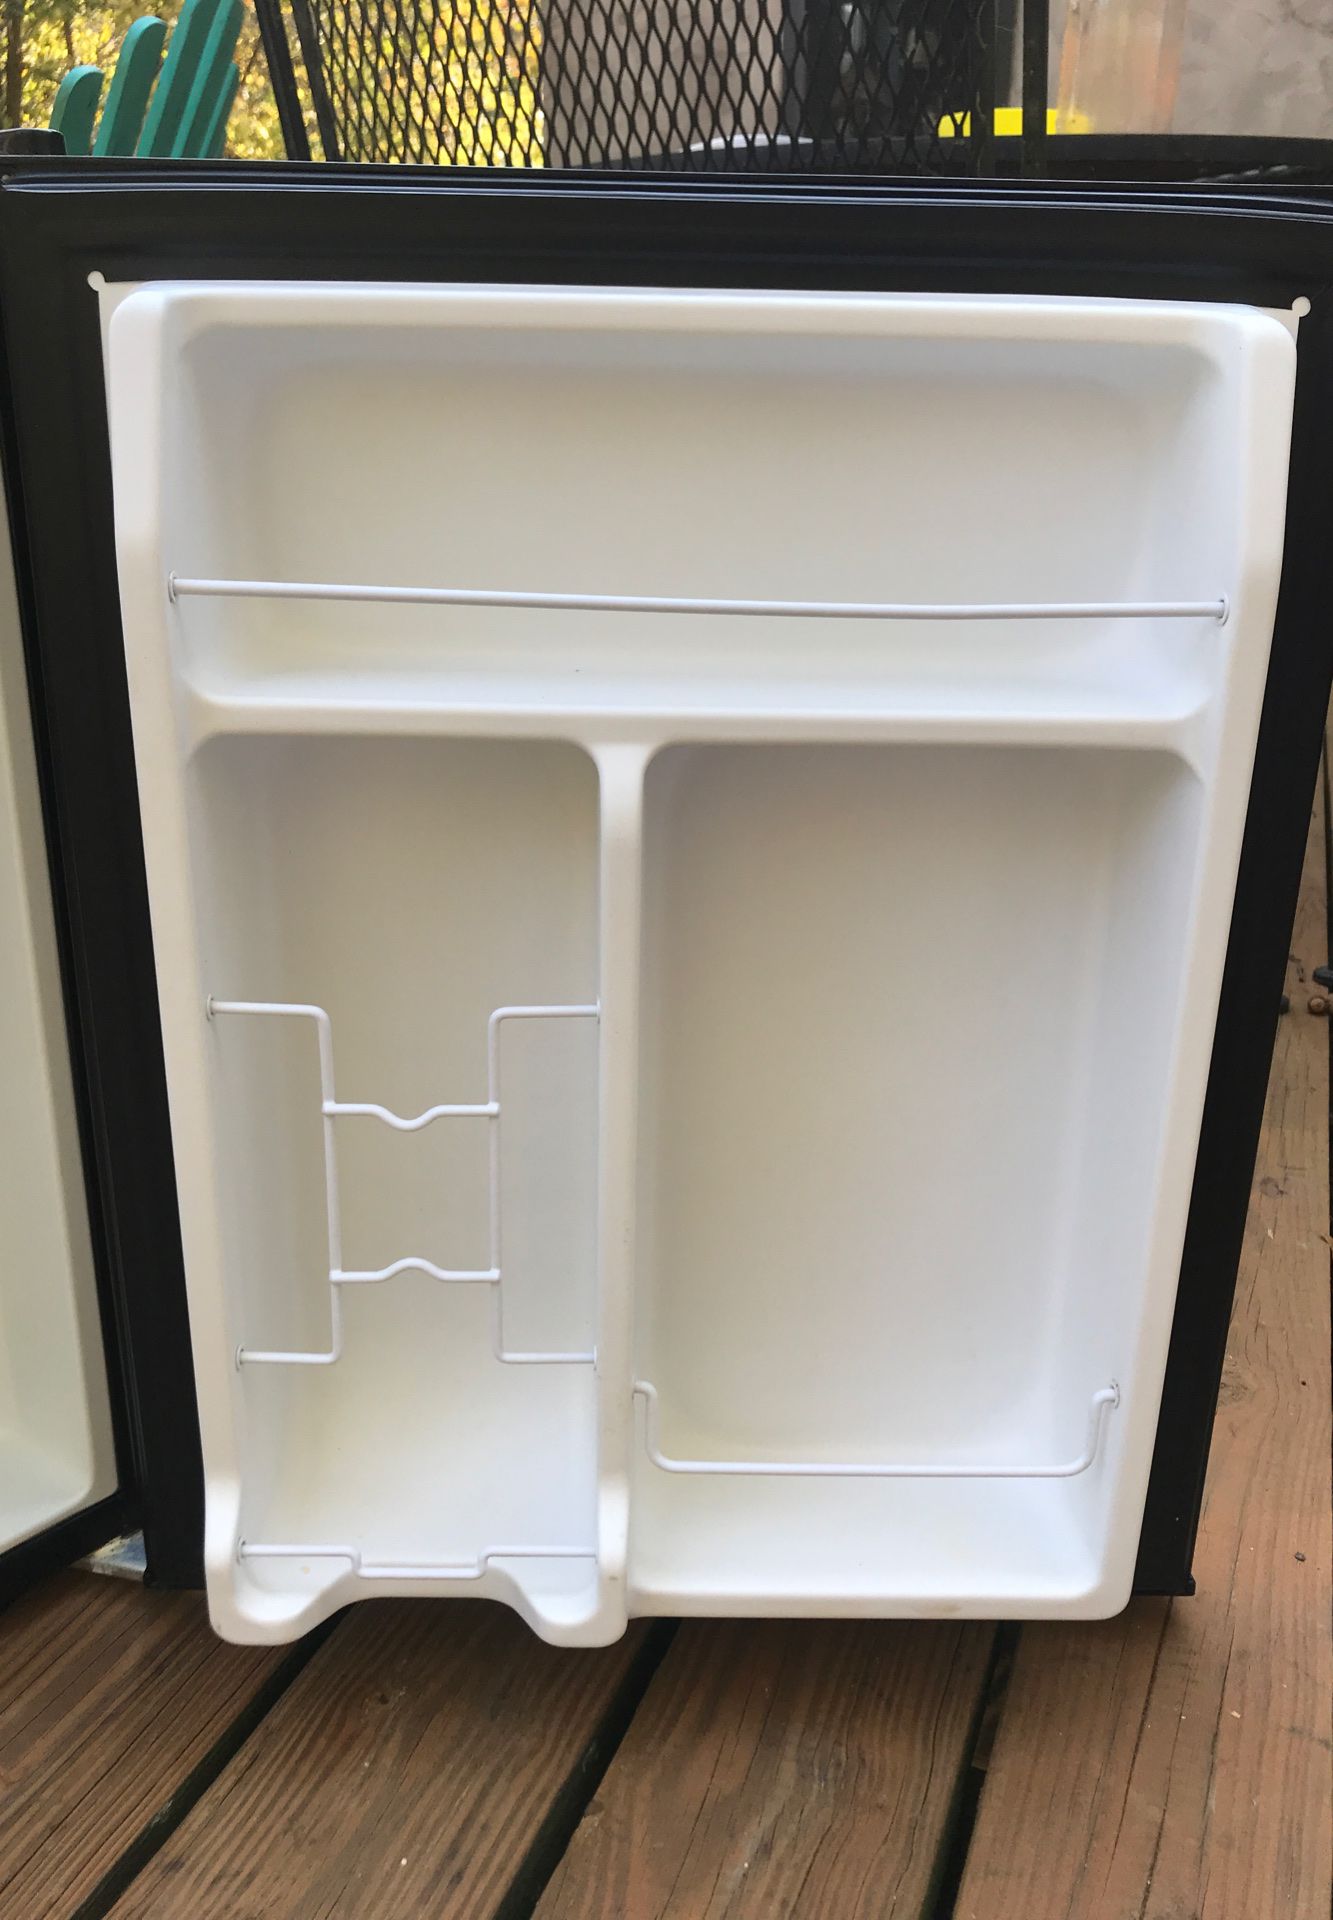 Galanz black mini fridge